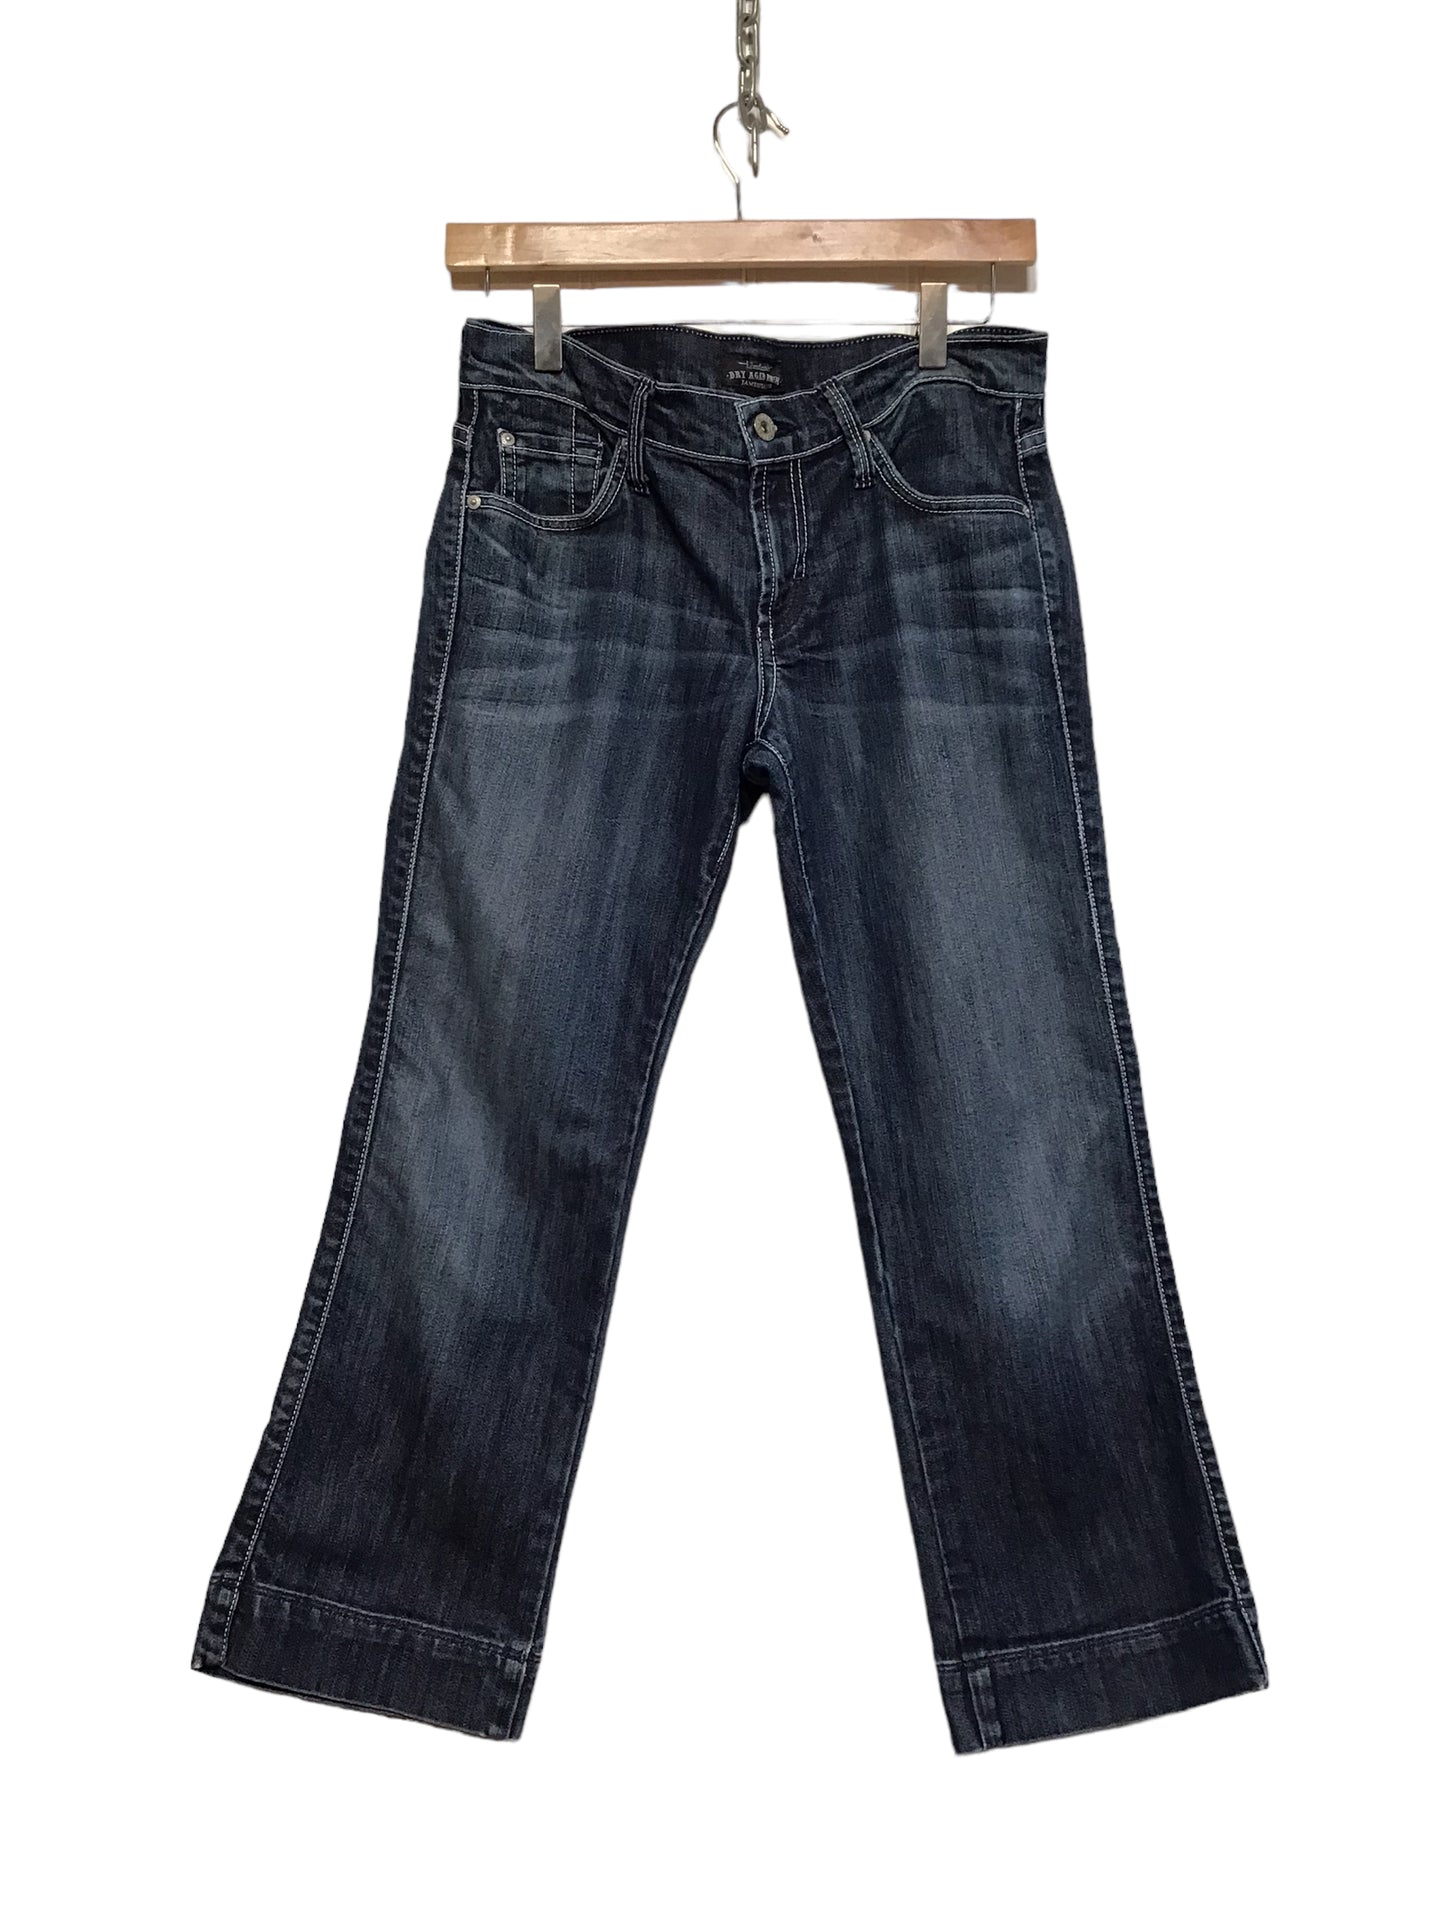 Dry Aged Denim Jeans (Size L)